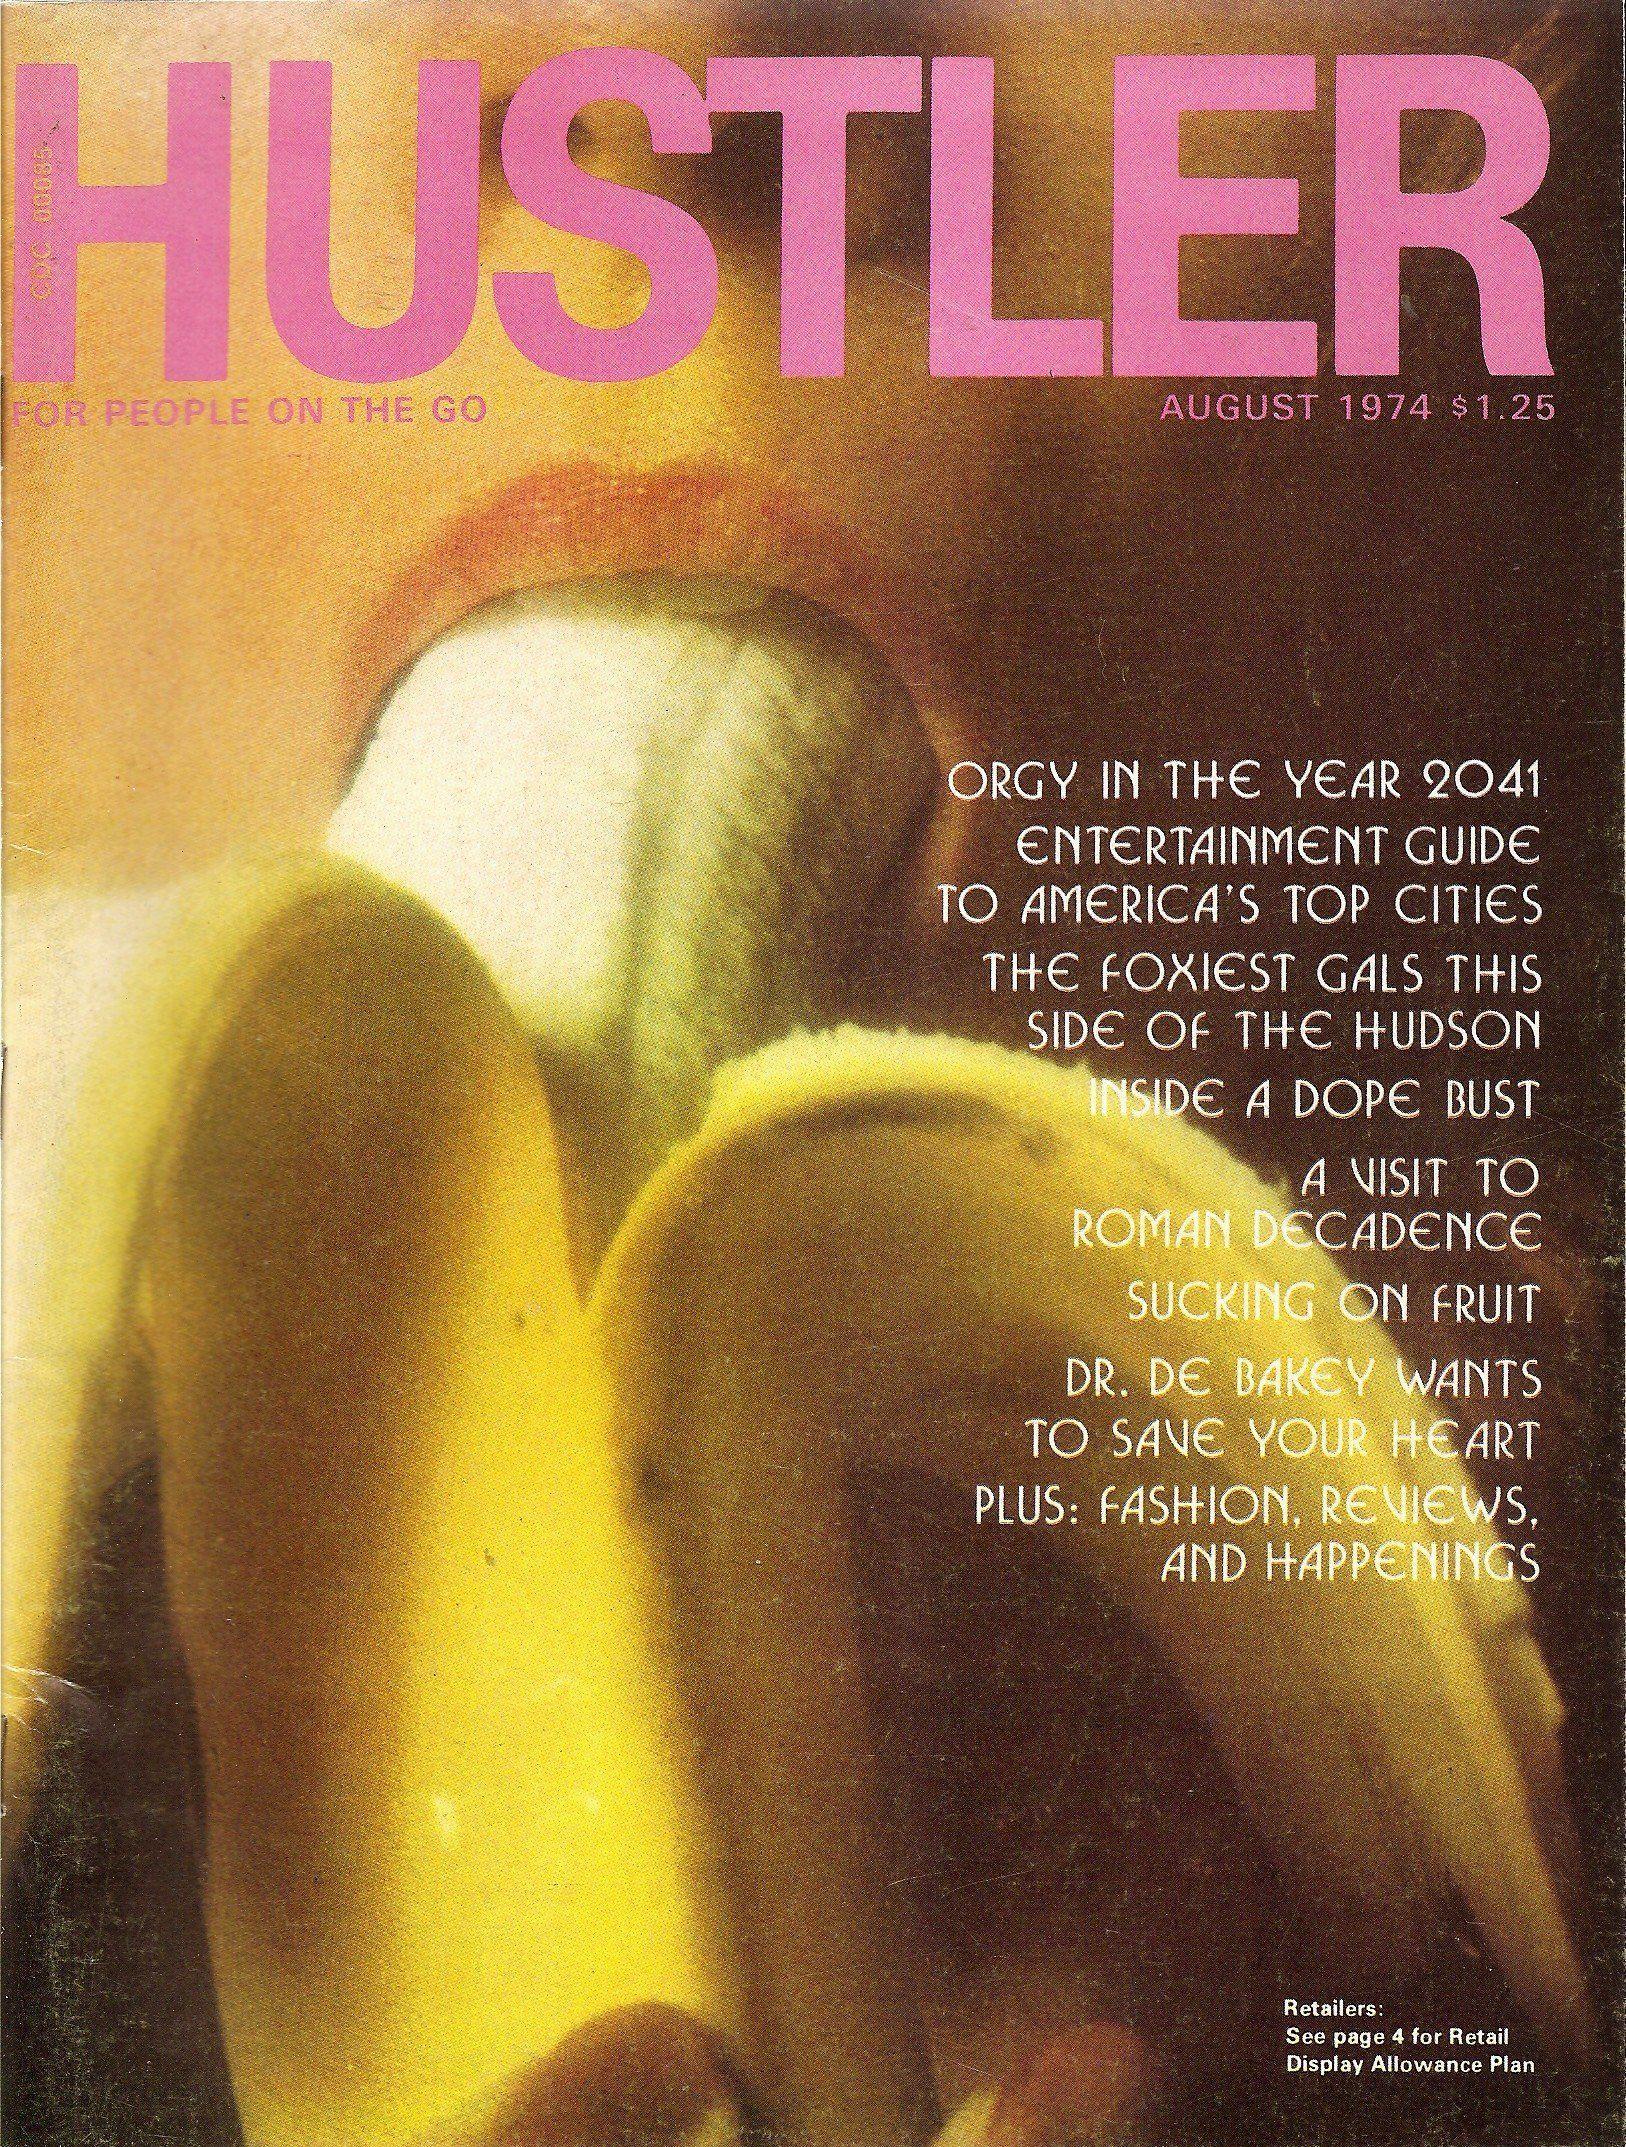 Hustler first 1974 image